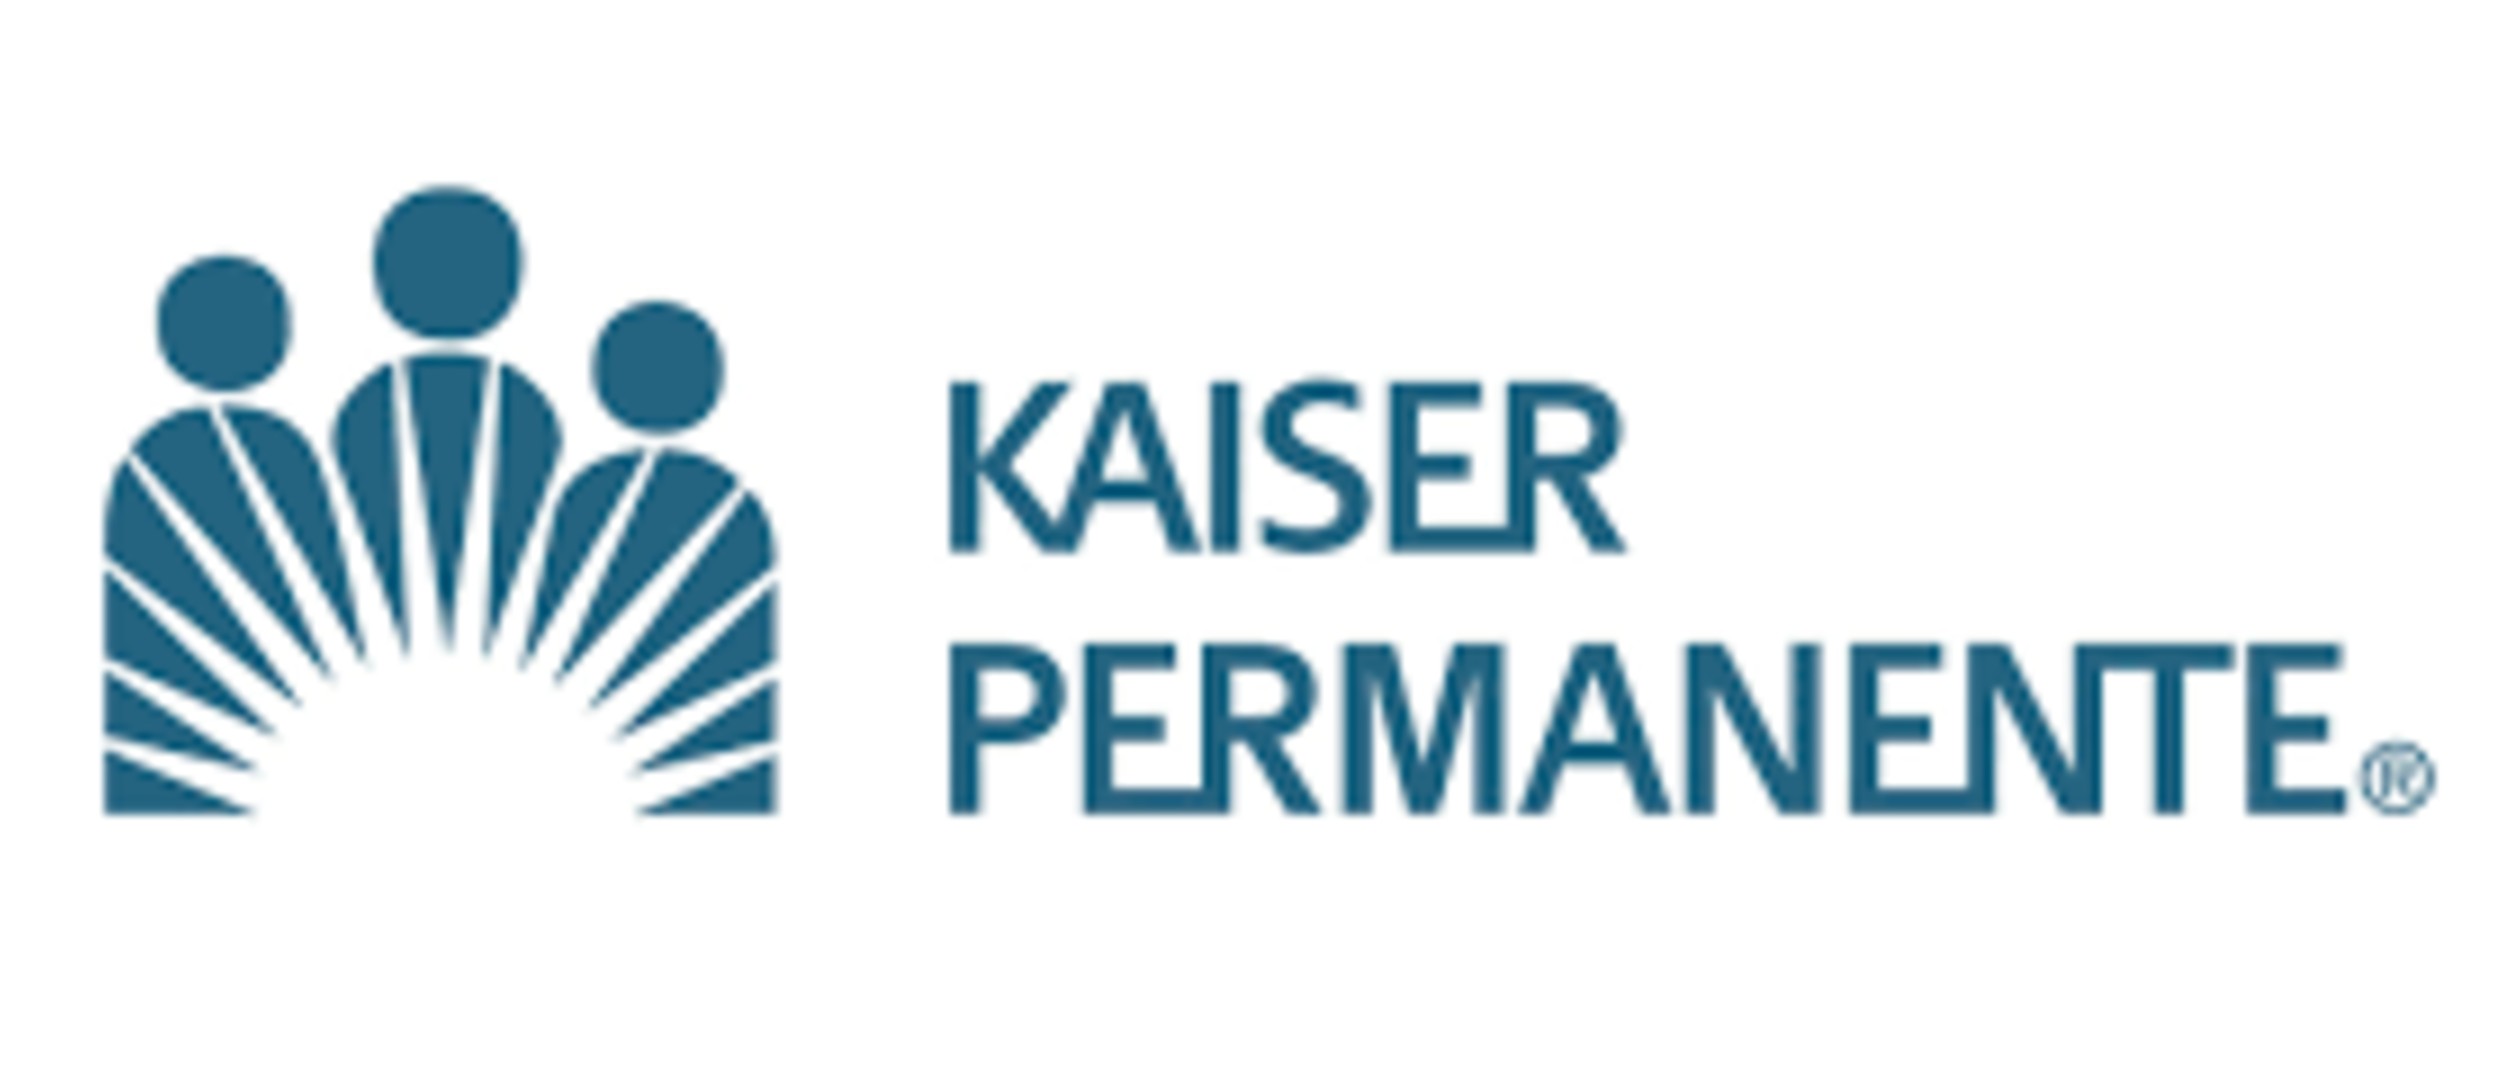 Dental insurance kaiser permanente carefirst regional traditional dental